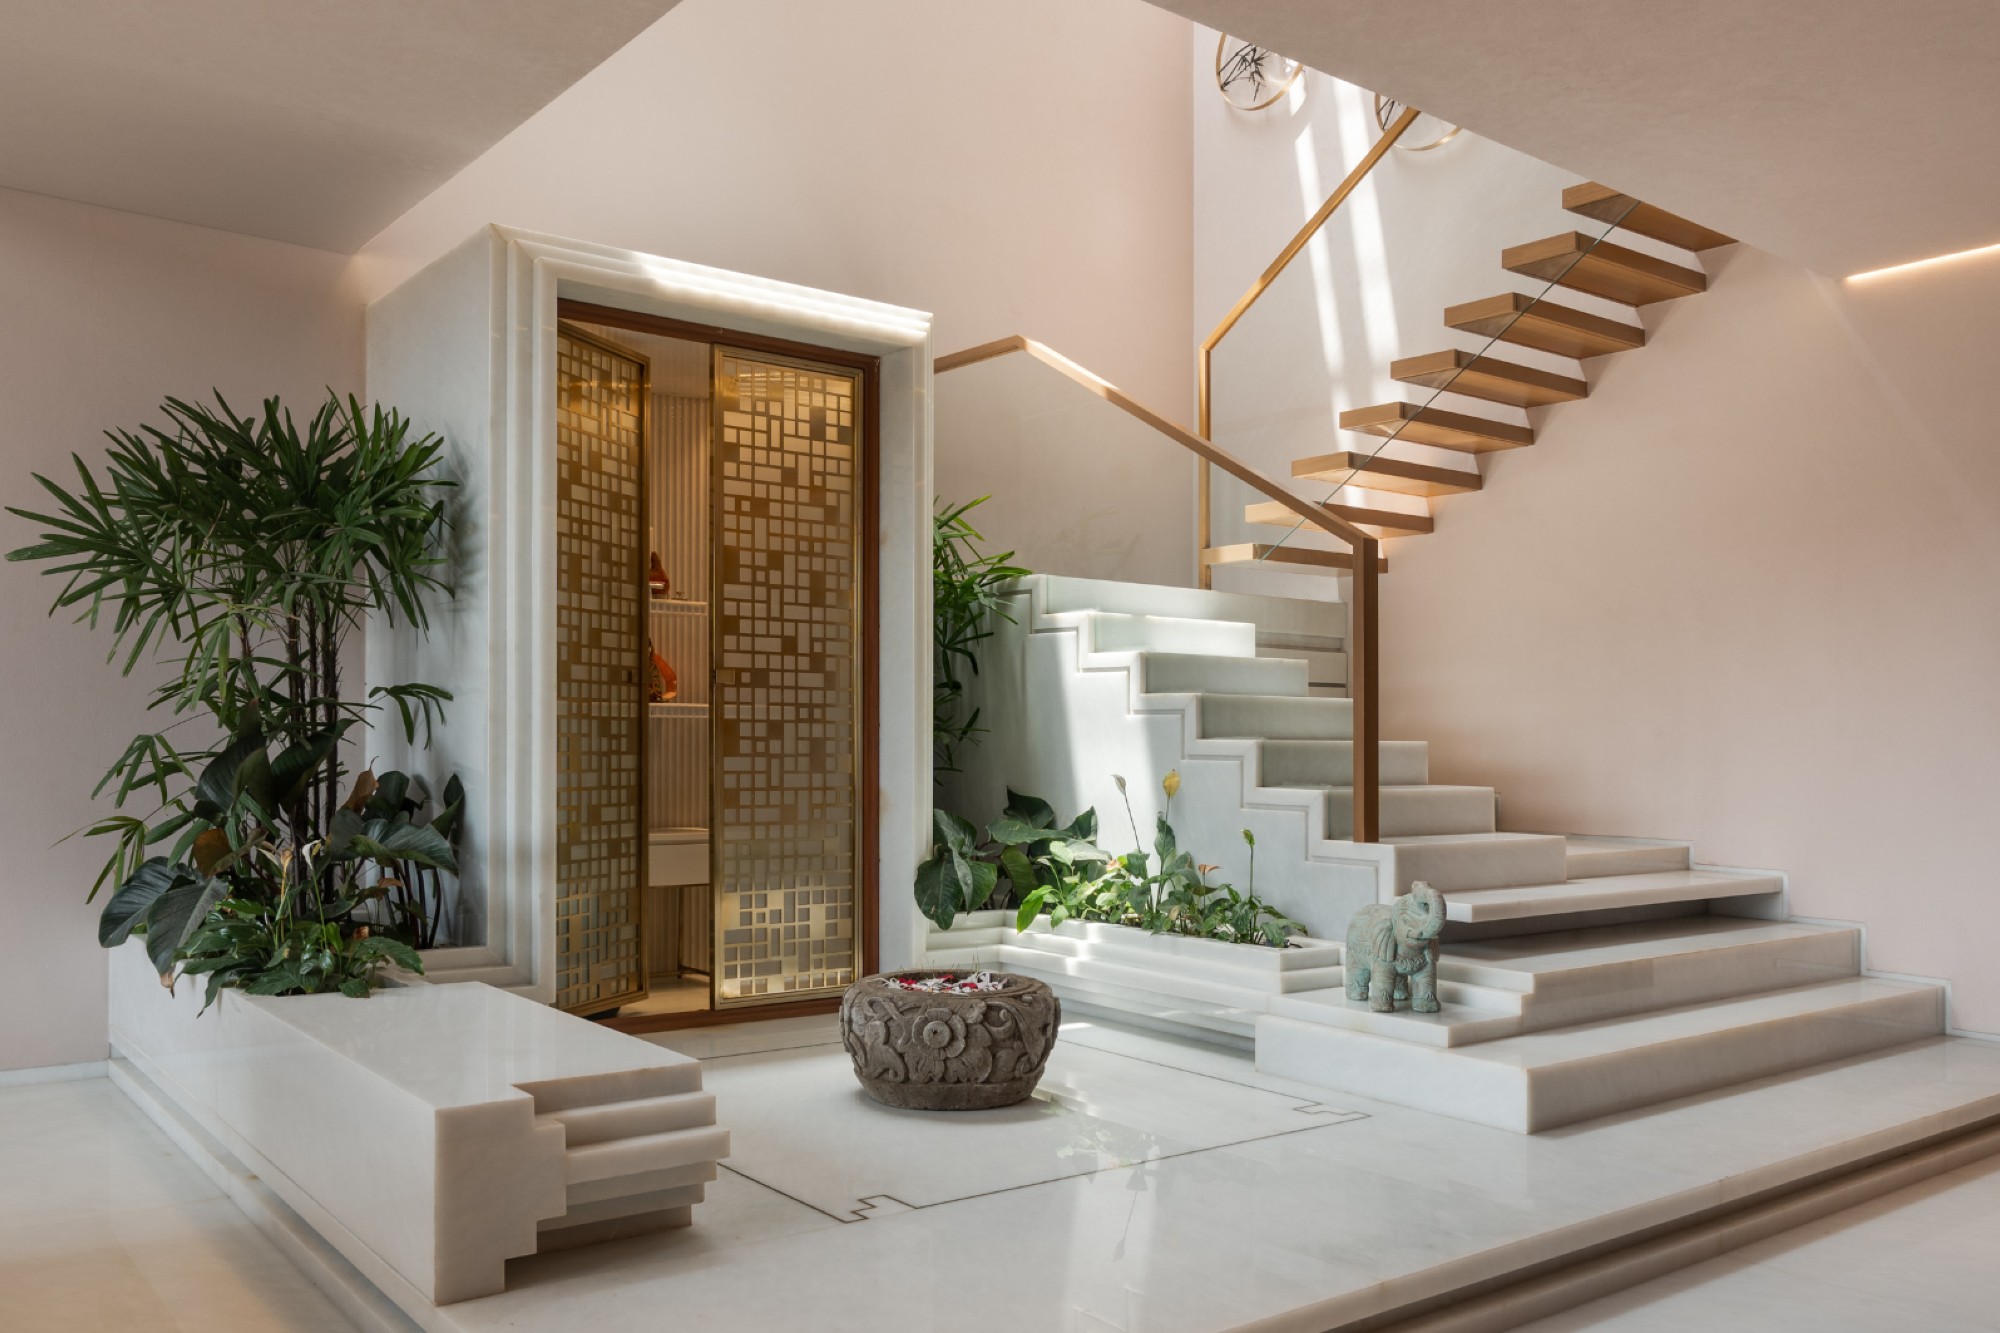 MCI transform ancestral home into modern luxury